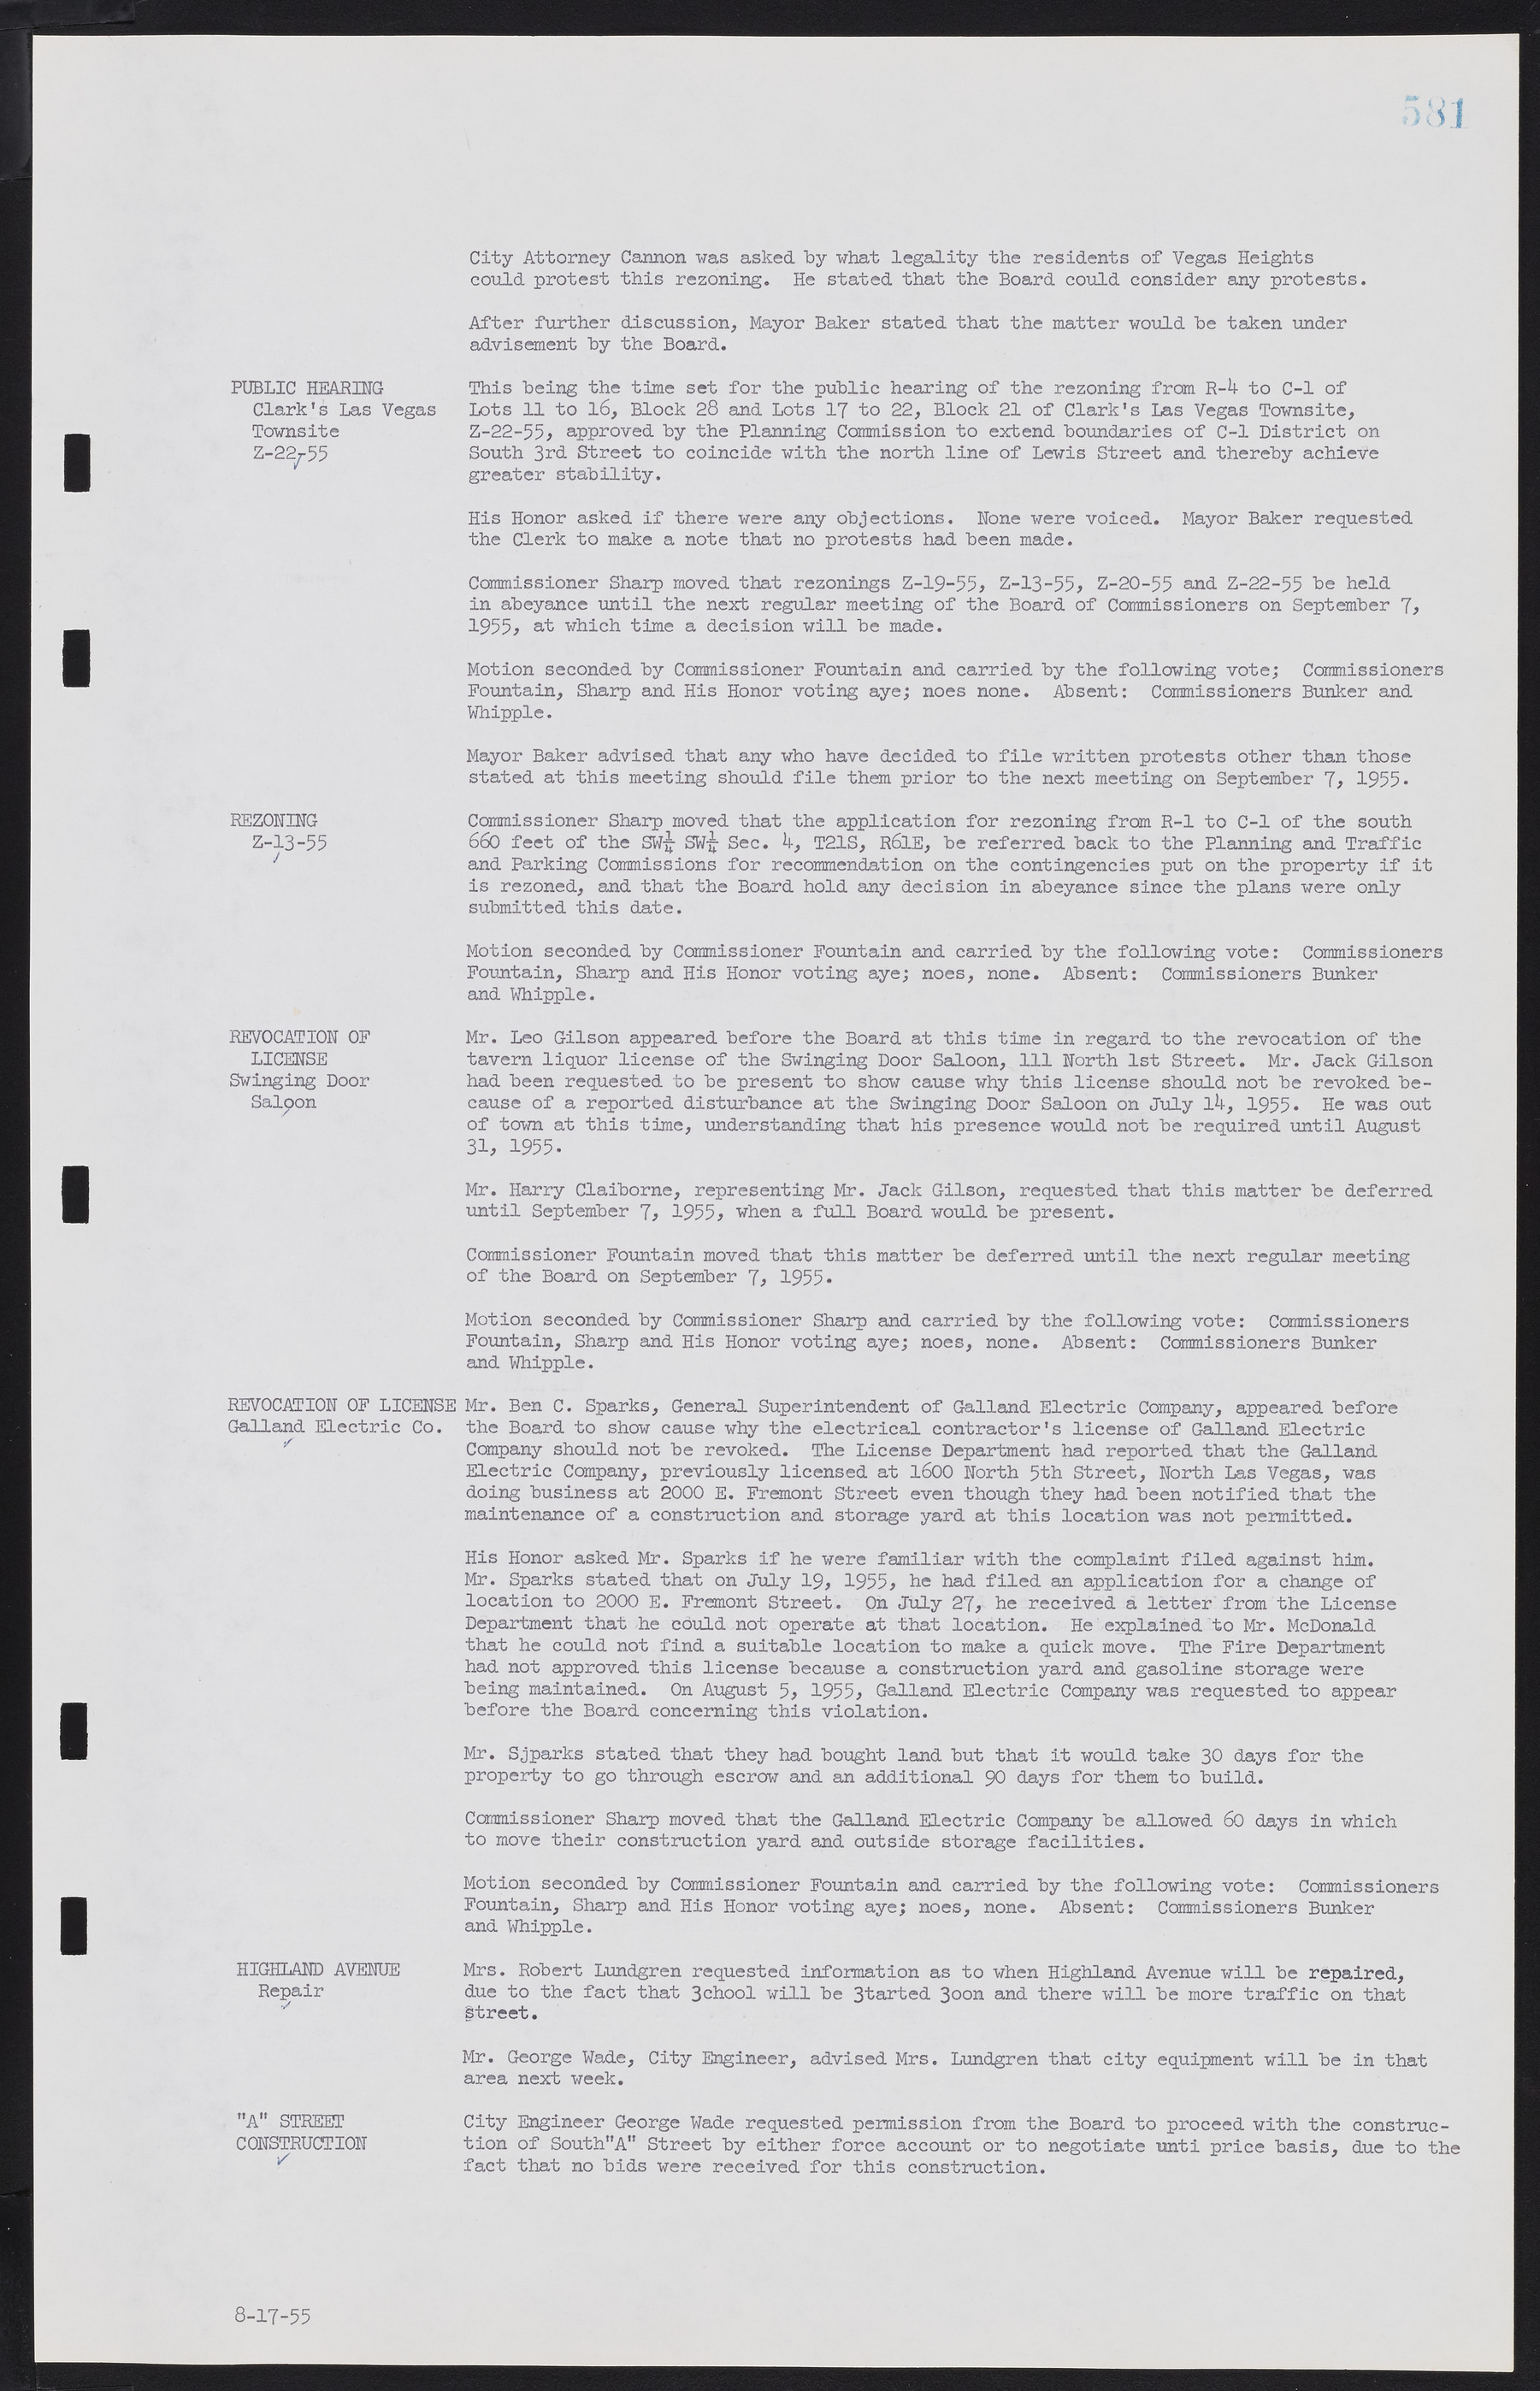 Las Vegas City Commission Minutes, February 17, 1954 to September 21, 1955, lvc000009-587